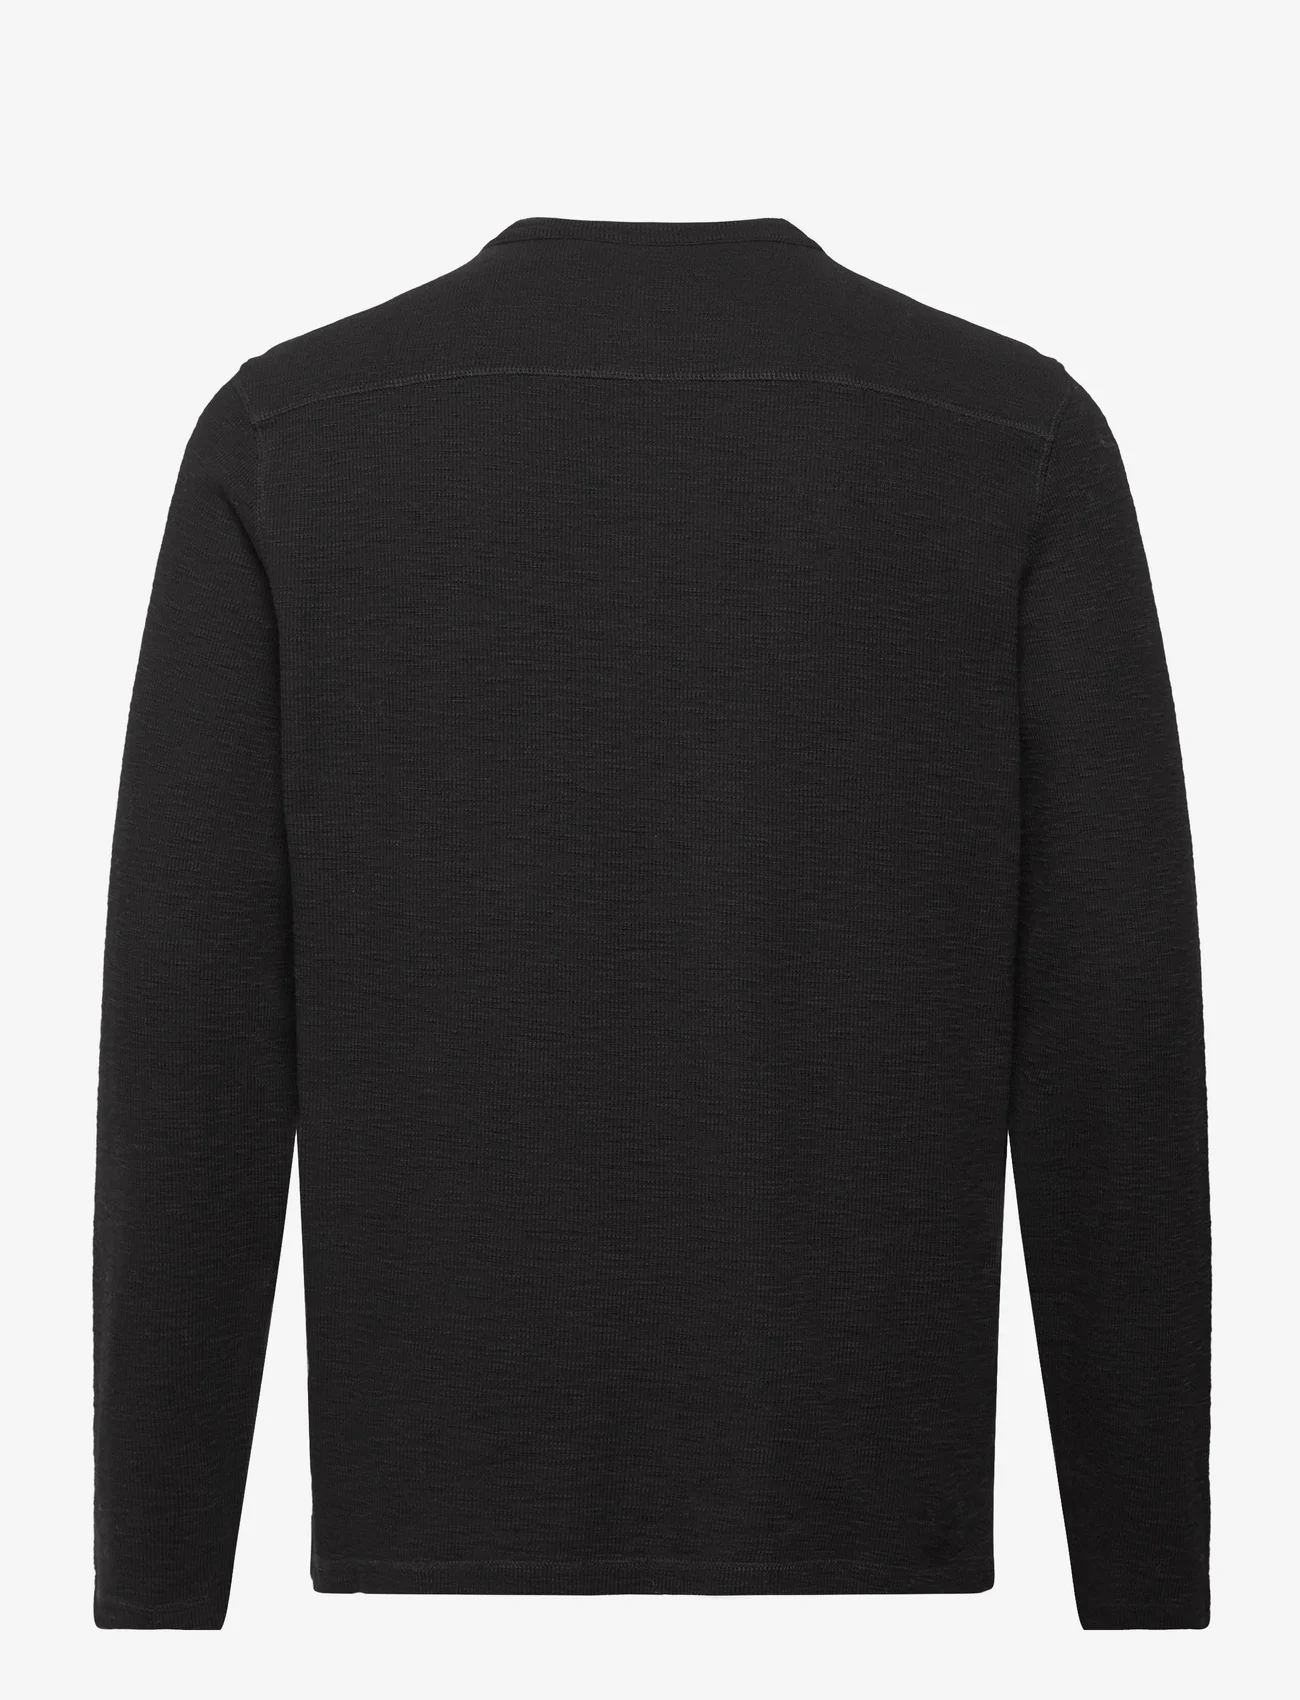 AllSaints - MUSE LS HENLEY - basic t-shirts - jet black - 1